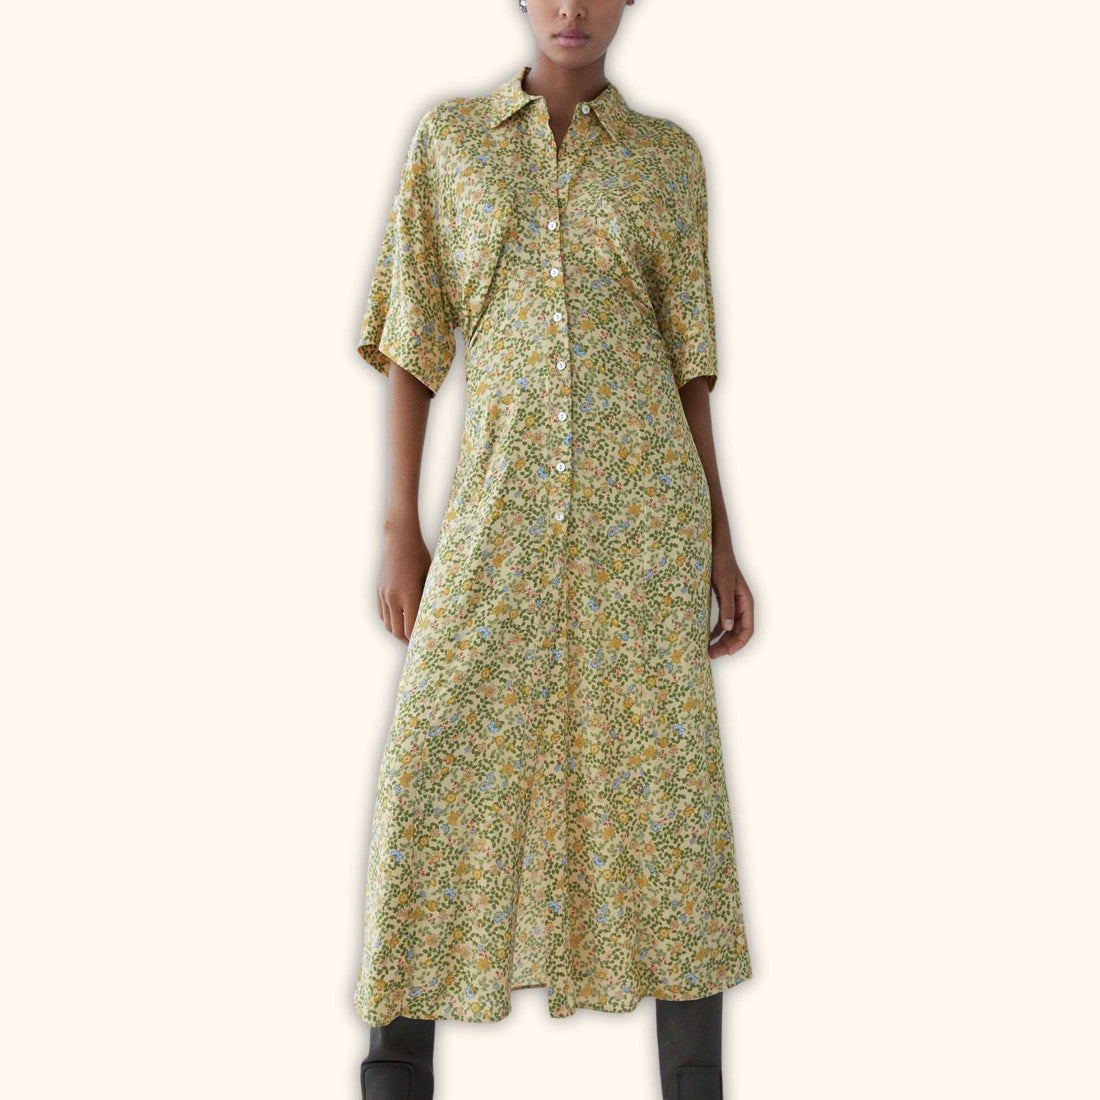 Zara Midi Length Floral Shirt Dress - Size Small - Sunshine Thrift